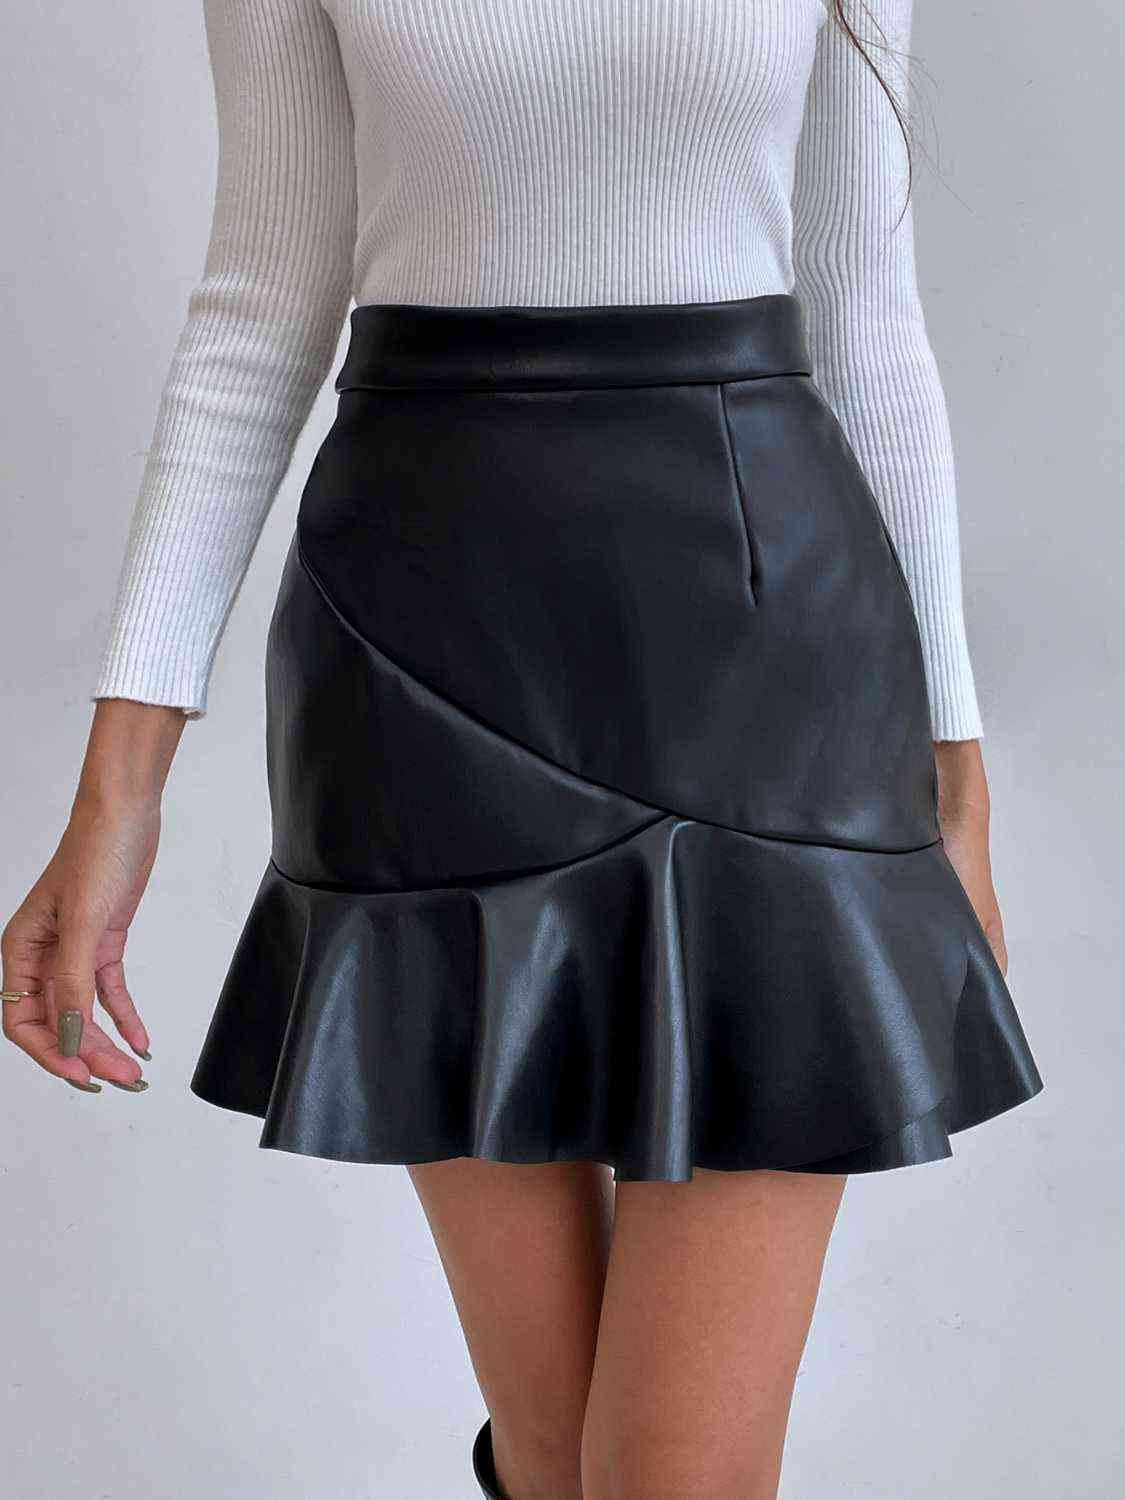 Ruffled PU Mini Skirt Black S 